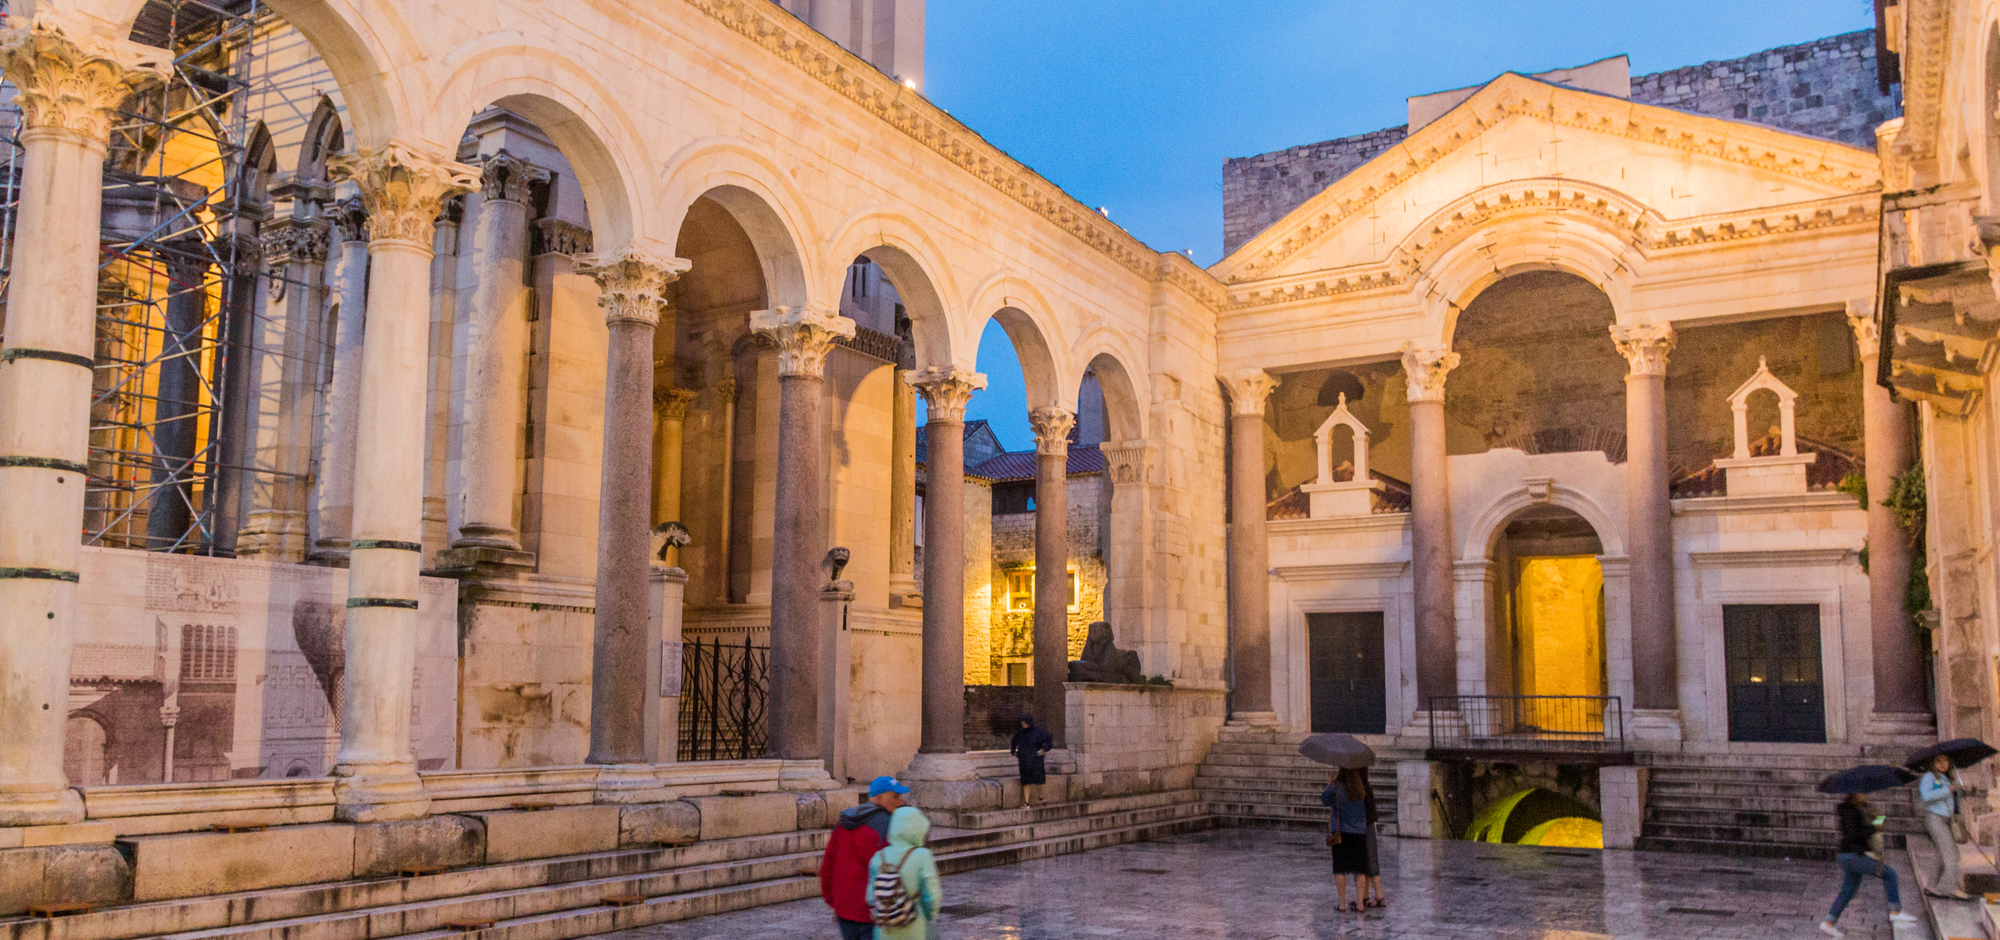 Croatia Split Diocletian's Palace